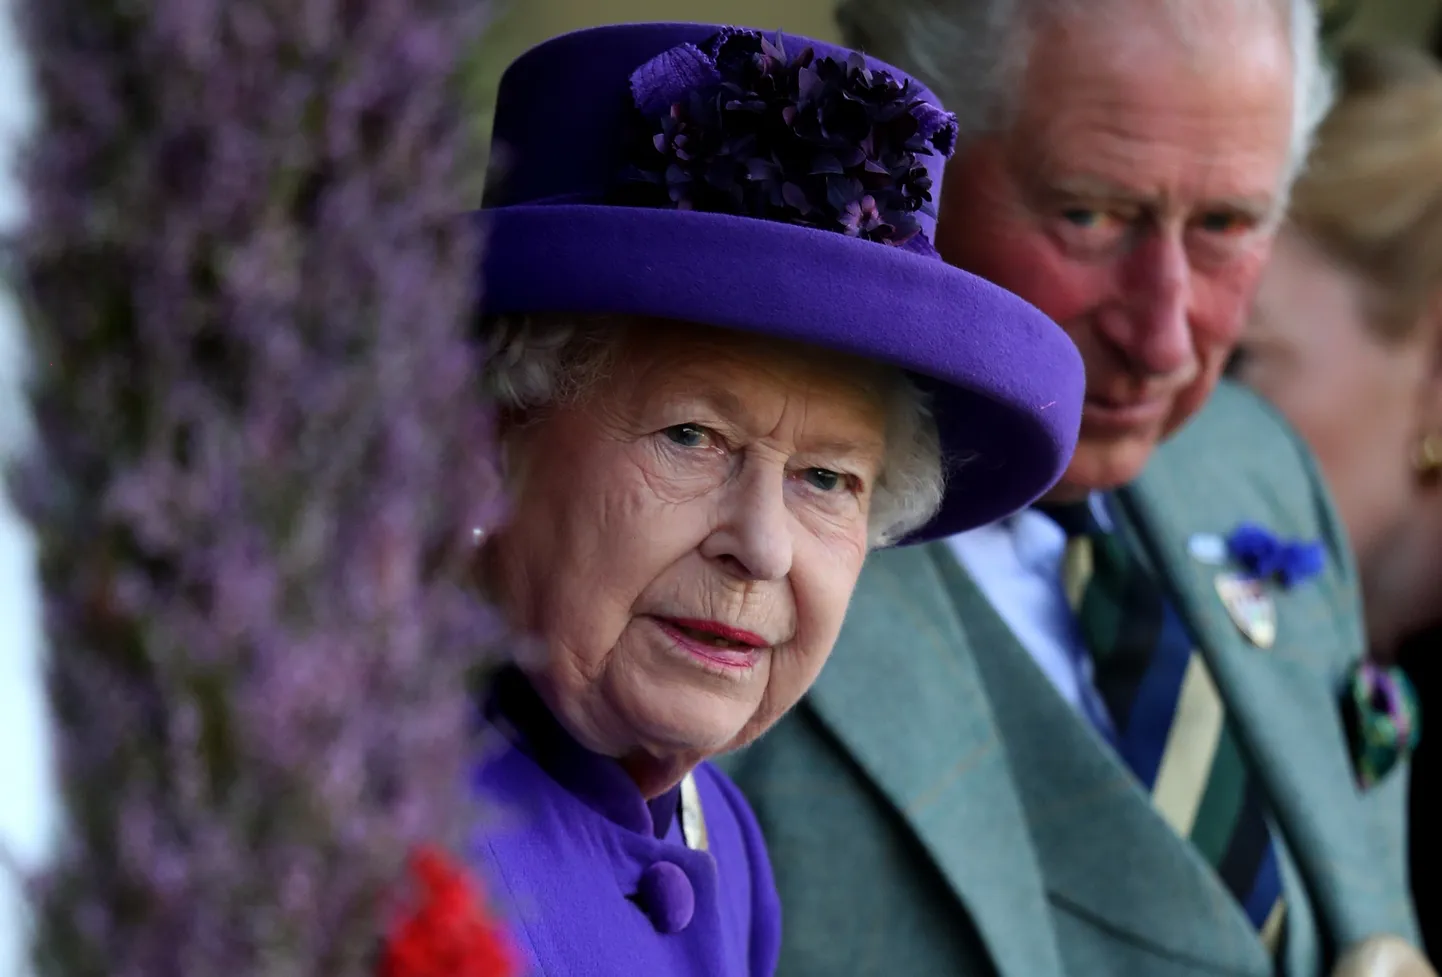 Kuninganna oma poja, prints Charlesiga 7. septembril 2019.